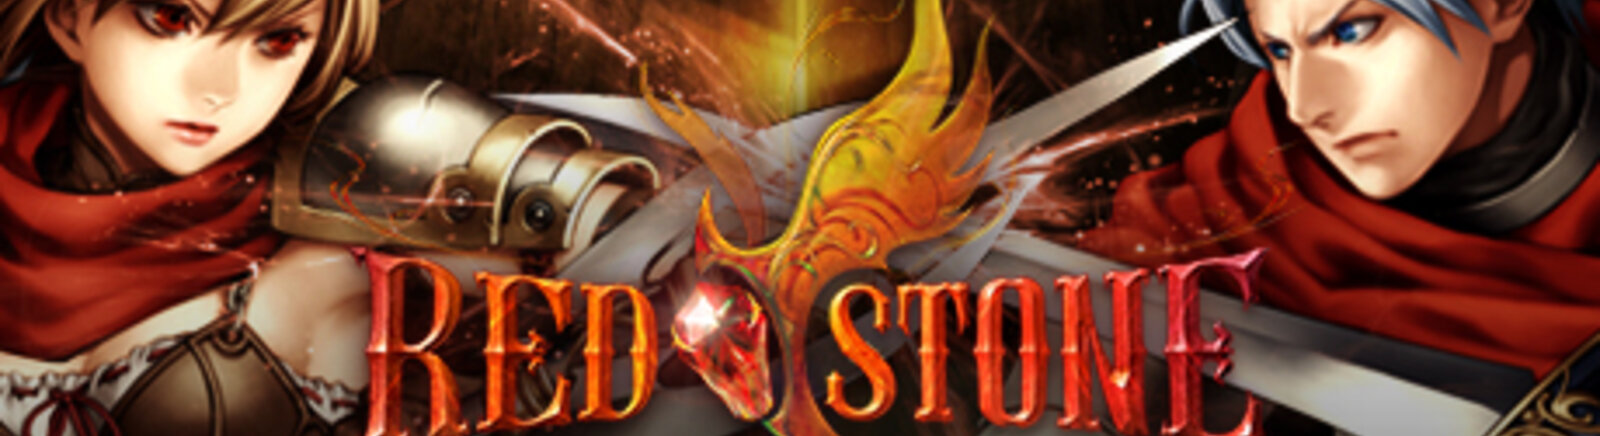 Дата выхода Red Stone Online (Red Stone)  на PC в России и во всем мире